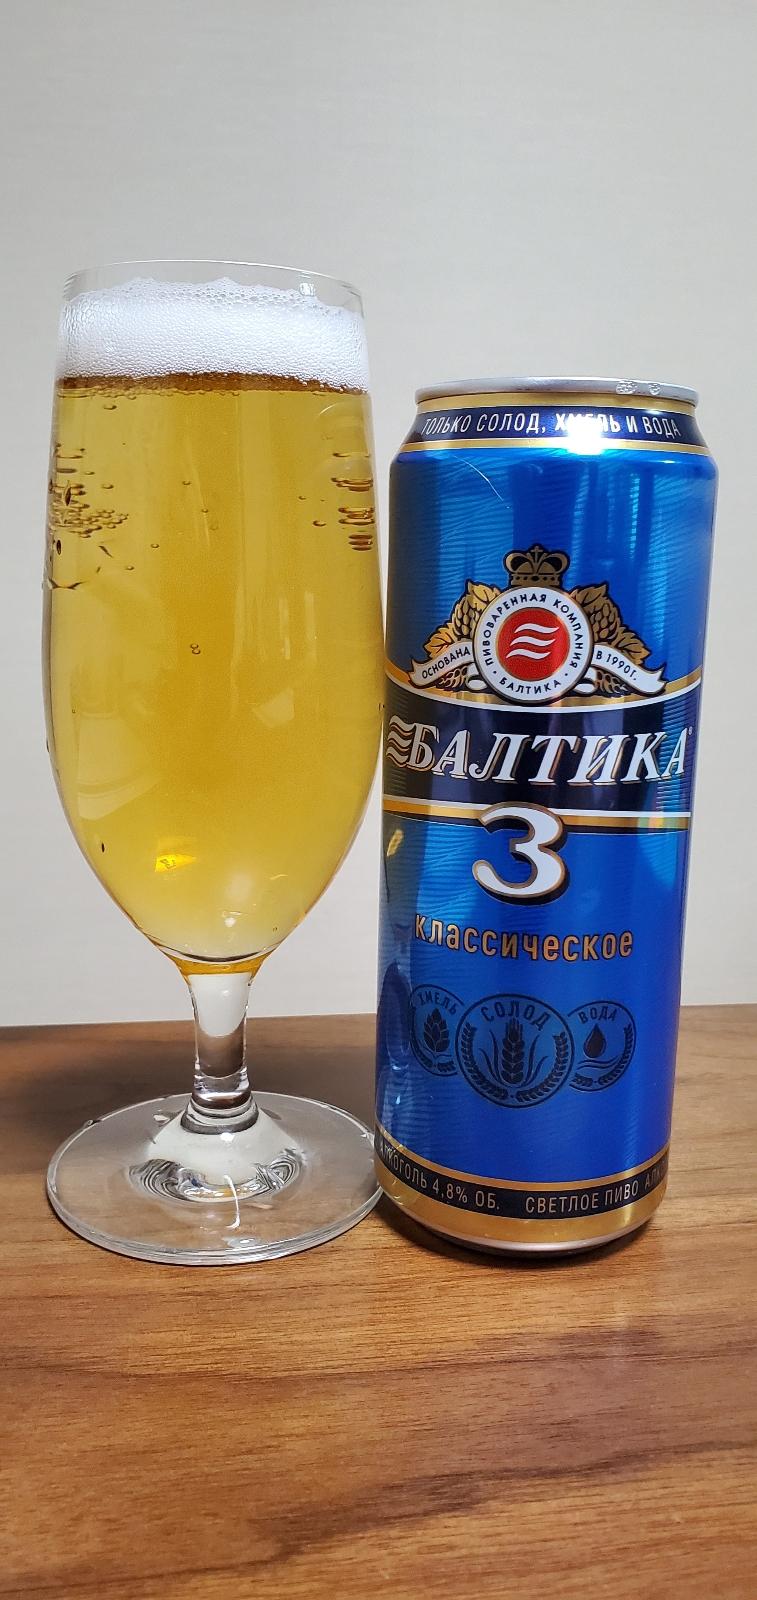 Baltika #3 Classic